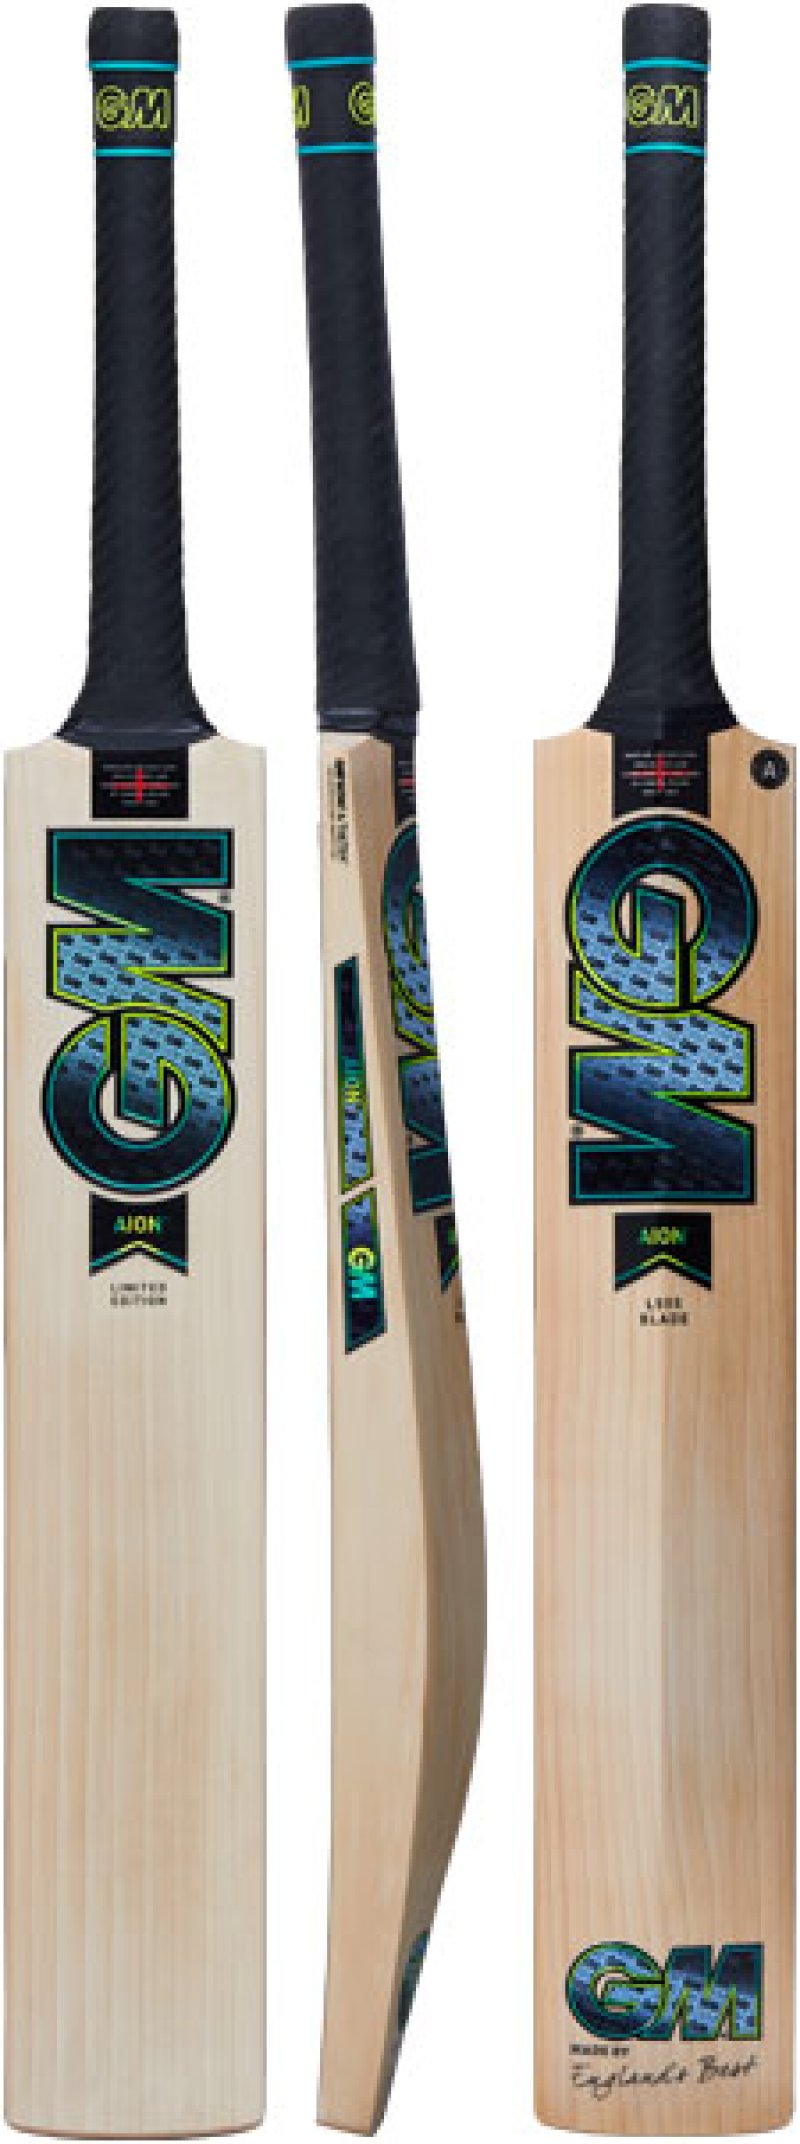 Gunn and Moore Aion L555 DXM Signature Cricket Bat